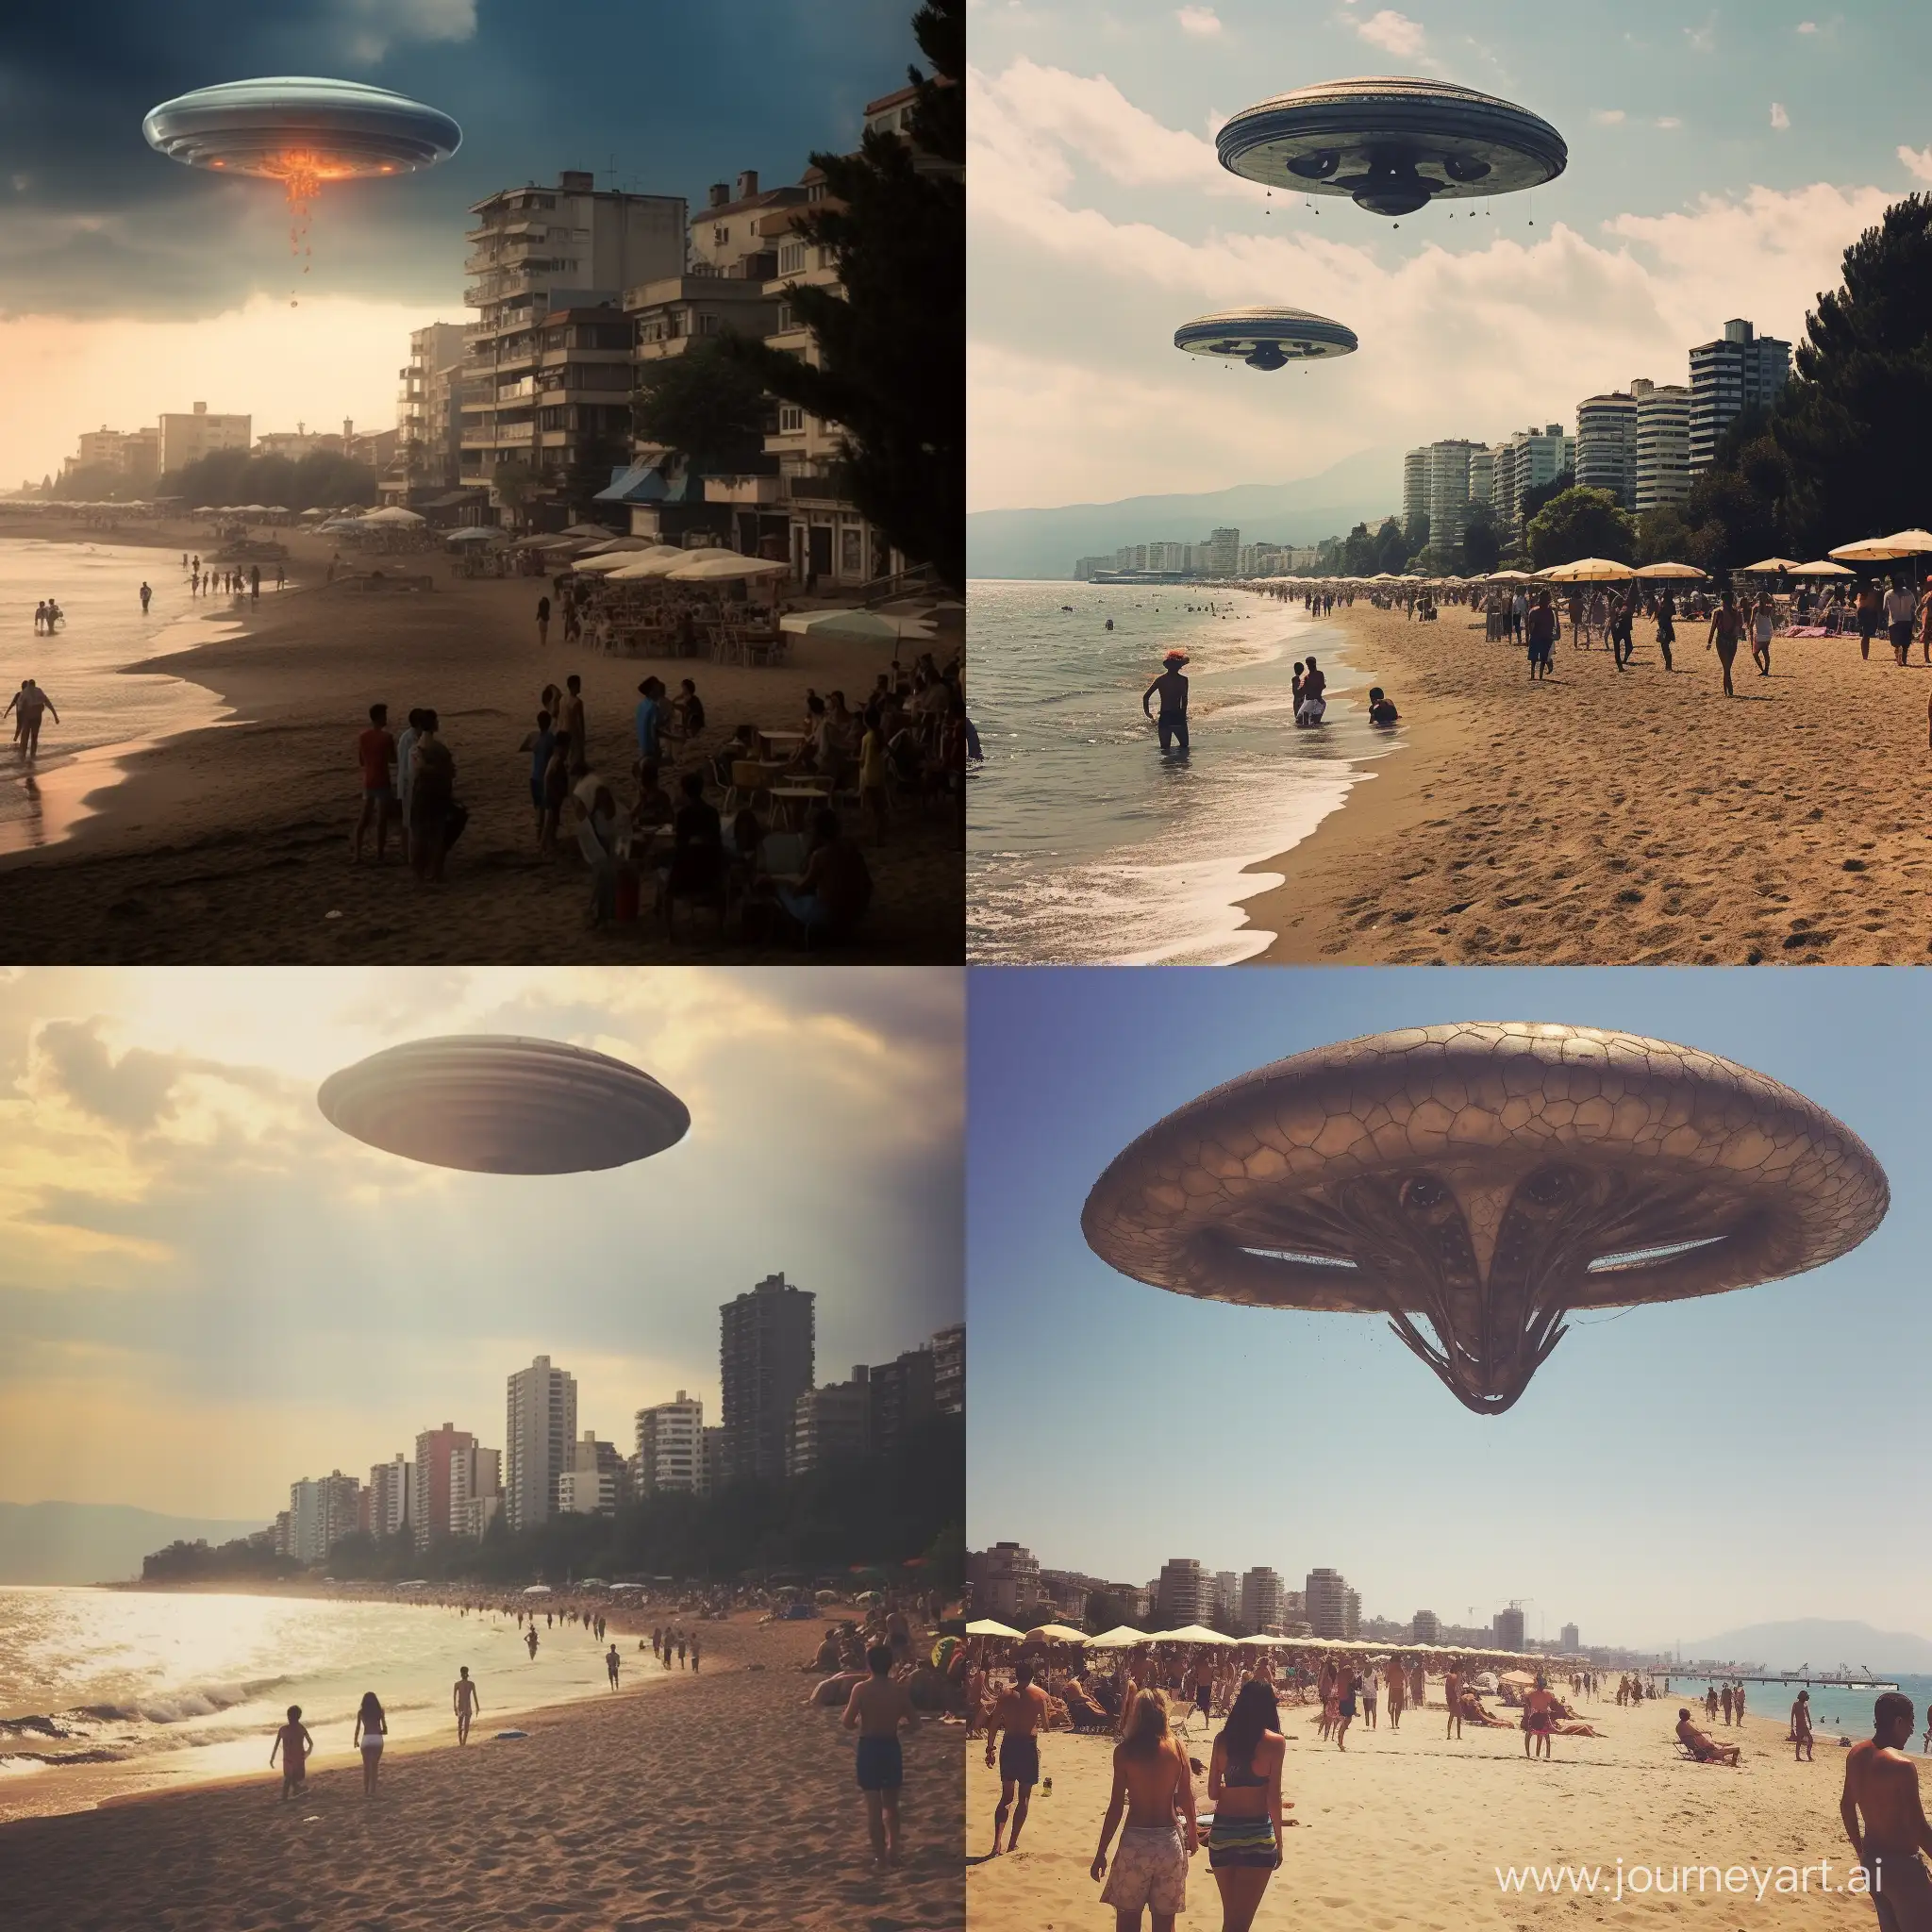 Seaside-Alien-Invasion-in-Kadiky-Extraterrestrial-Encounter-on-the-Shore